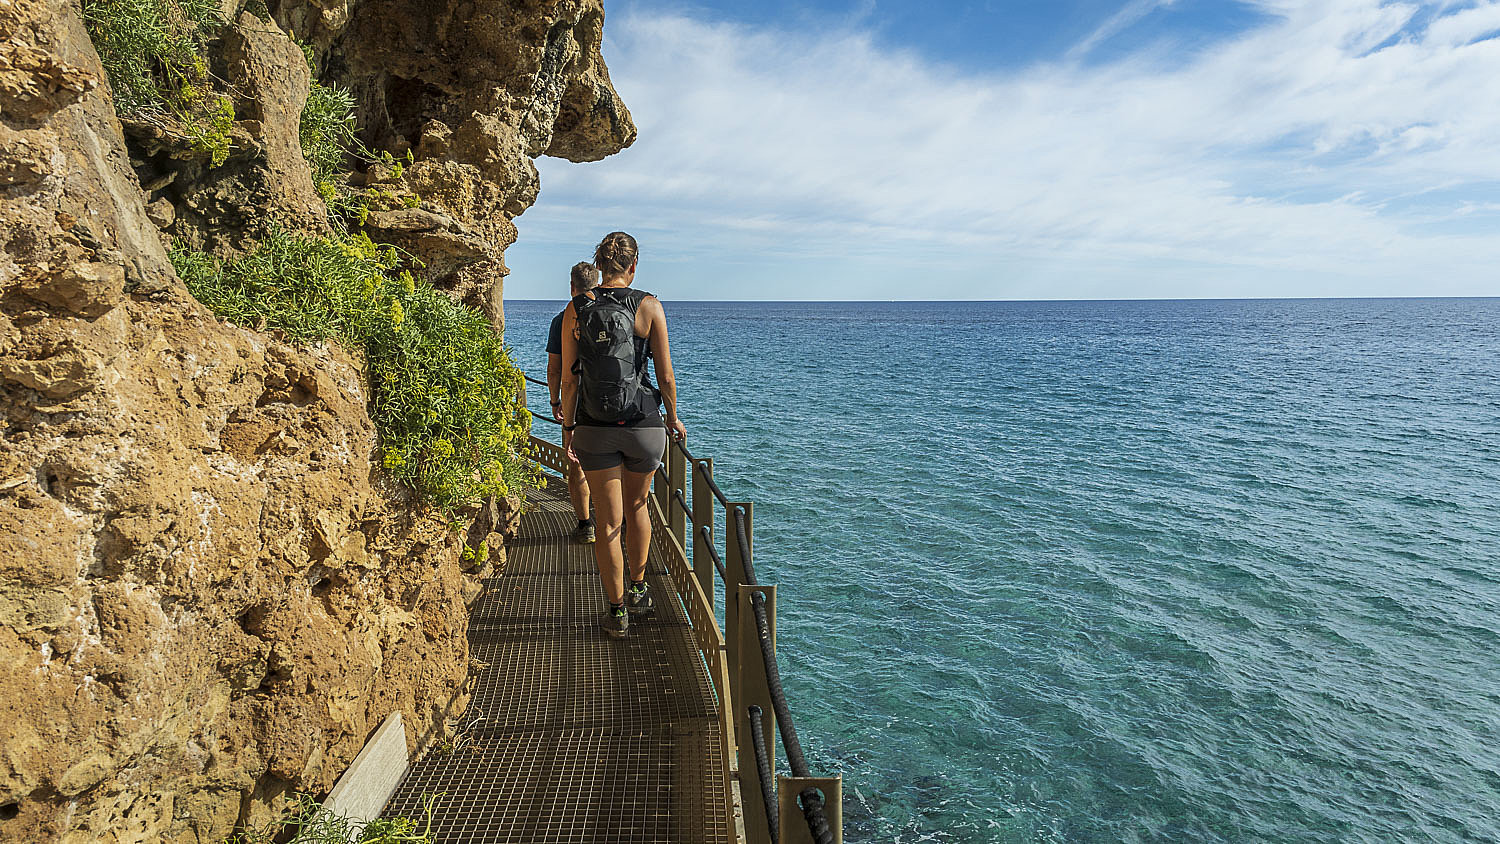 Zwei Personen laufen einen Weg direkt an einer Felswand über dem Meer entlang